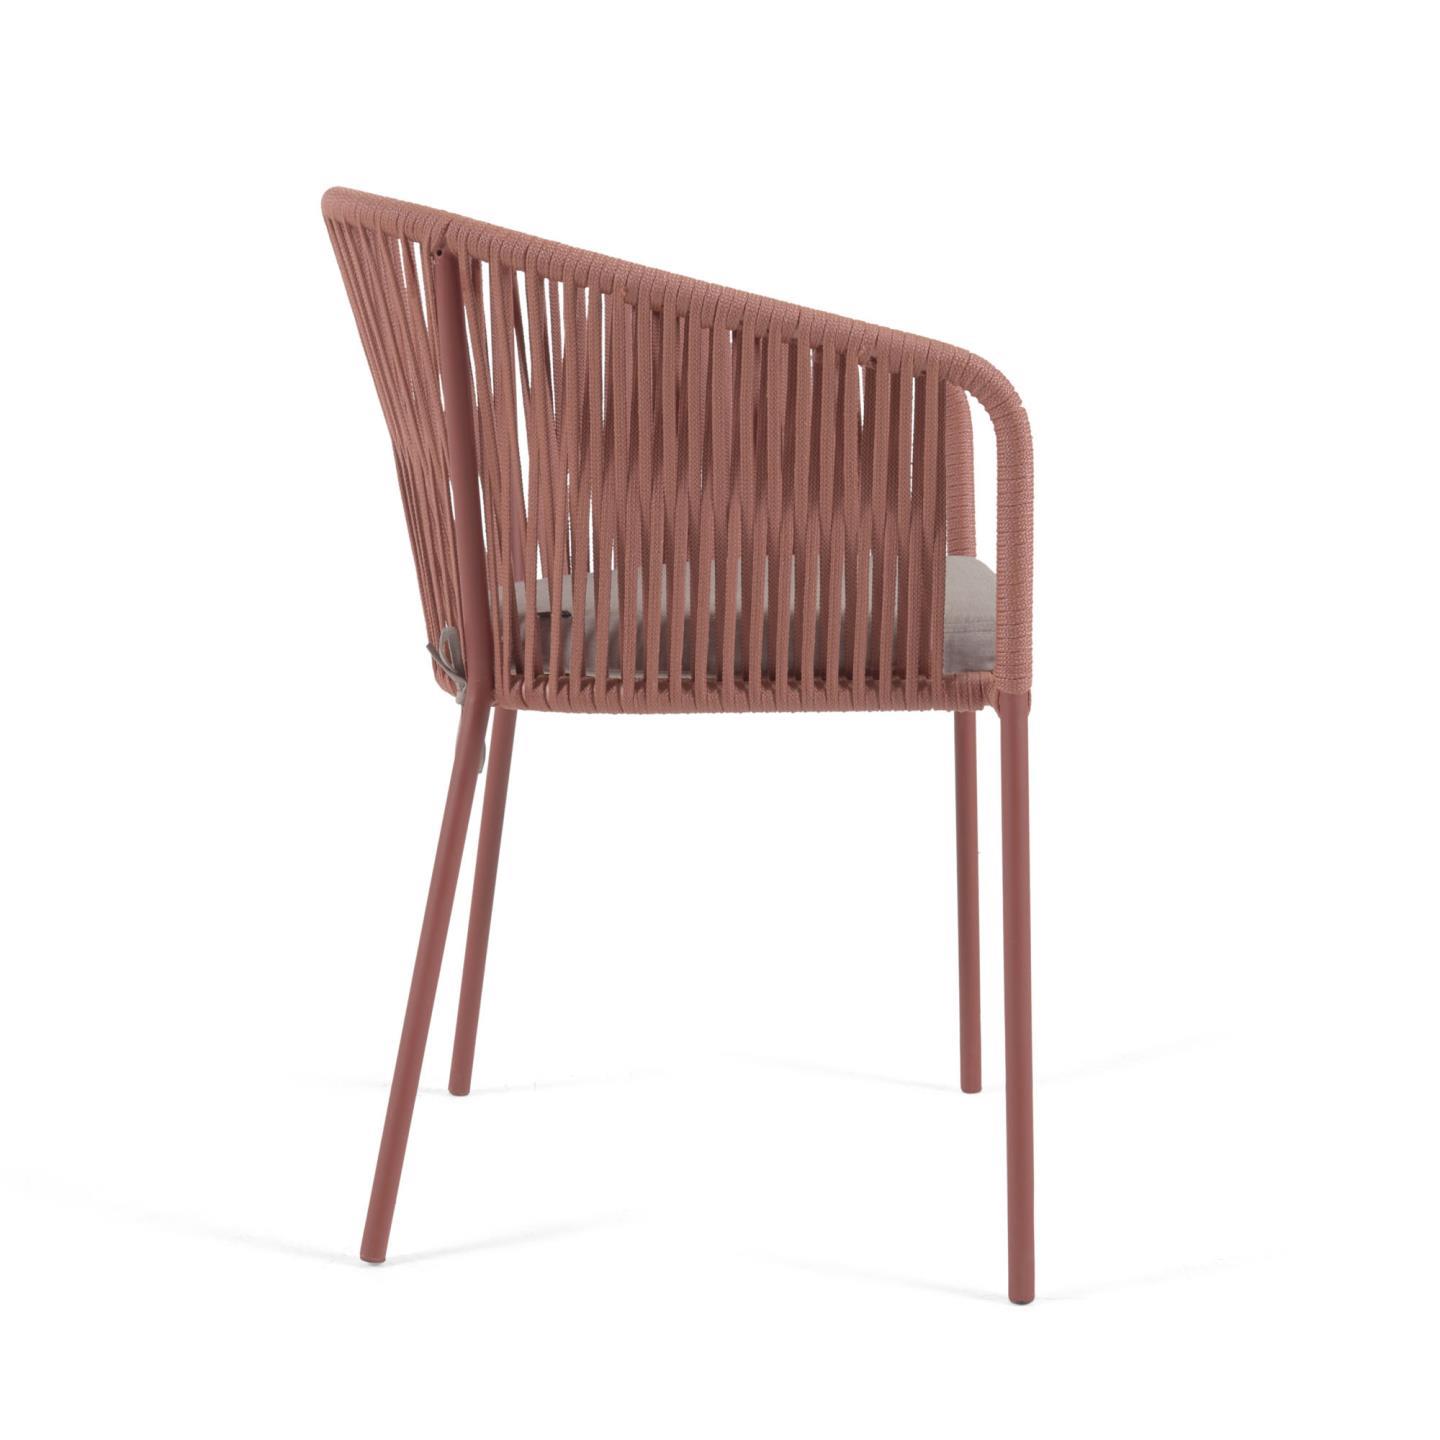 Yanet cord chair in terracotta